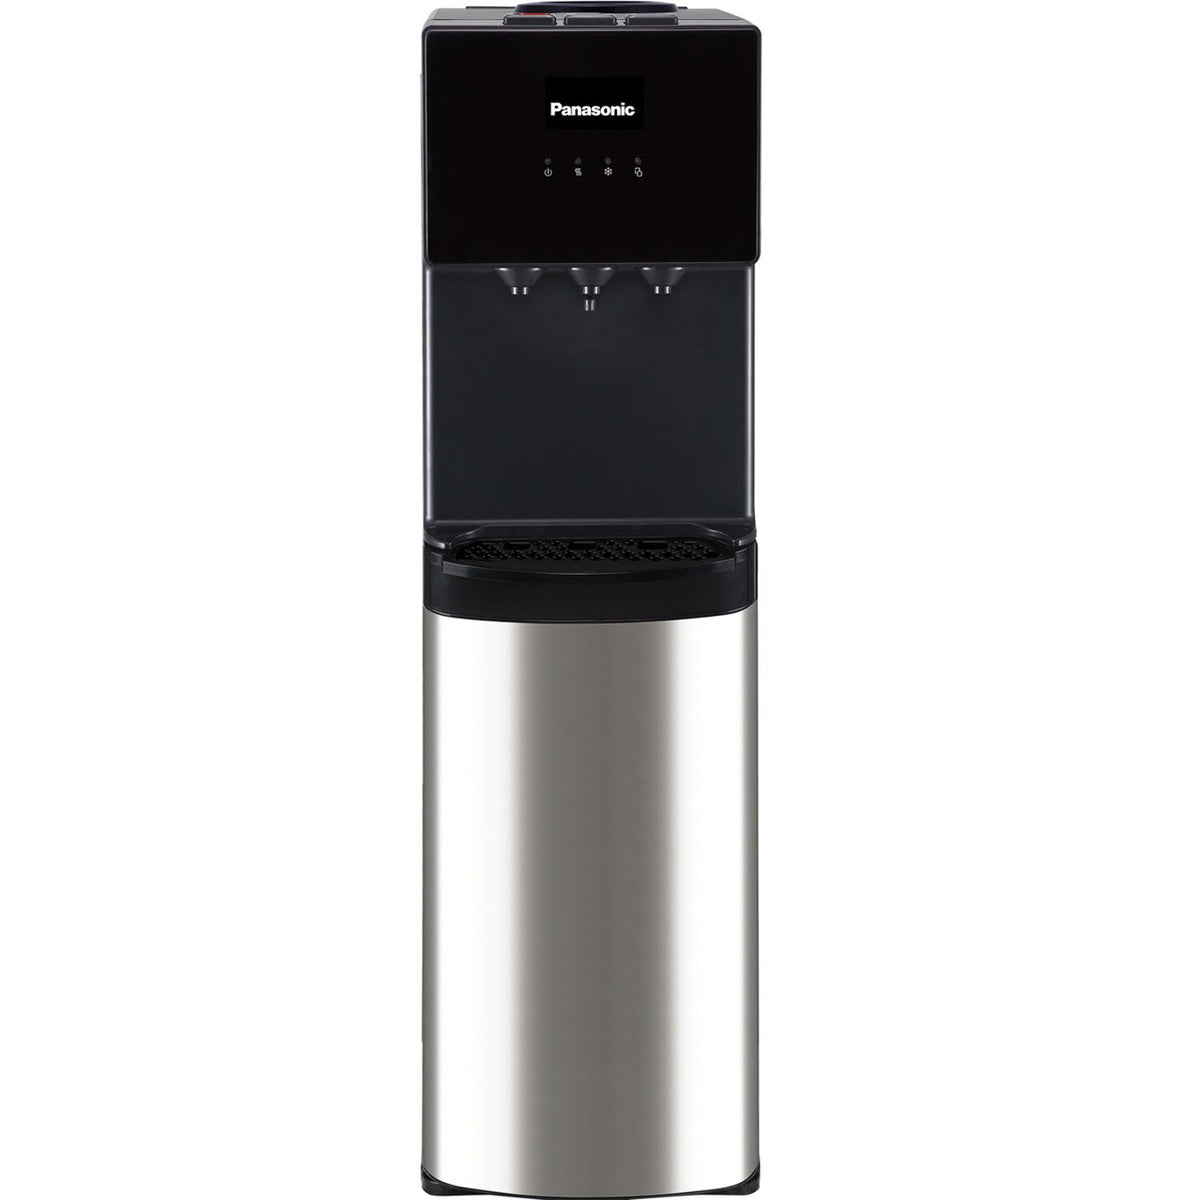 PANASONIC Stand Water Dispenser - Black & Stainless Steel SDM-WD3438BG